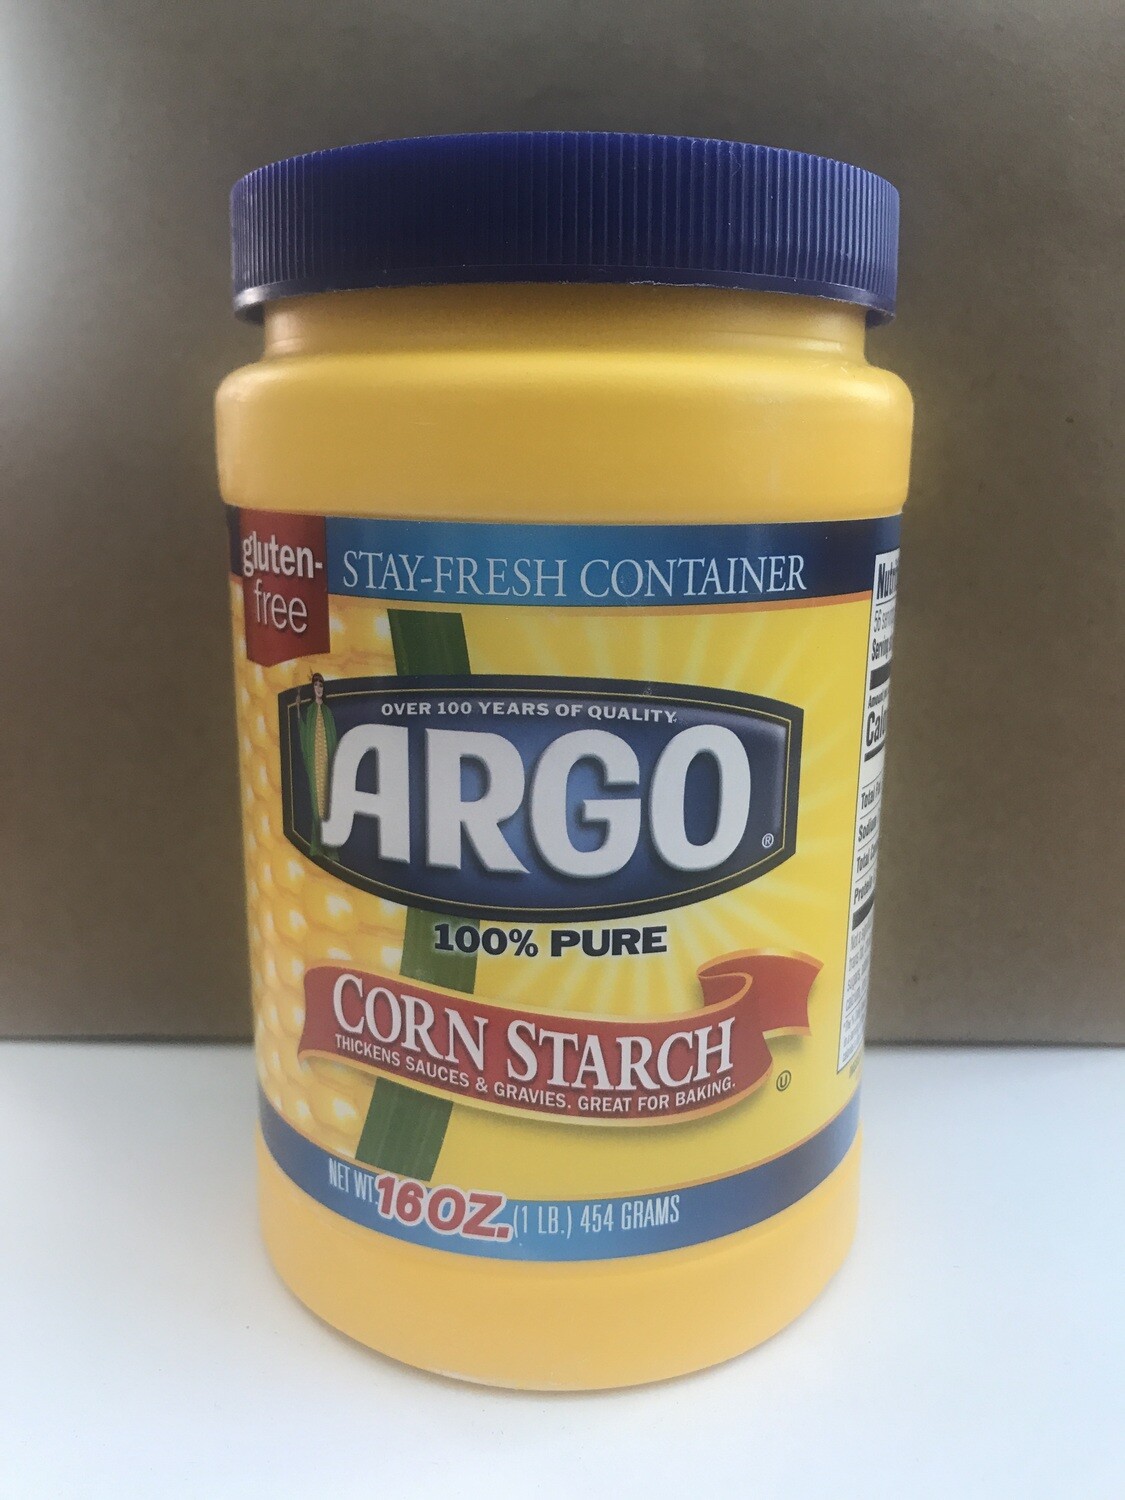 Grocery / Baking / Argo Corn Starch, 16 oz